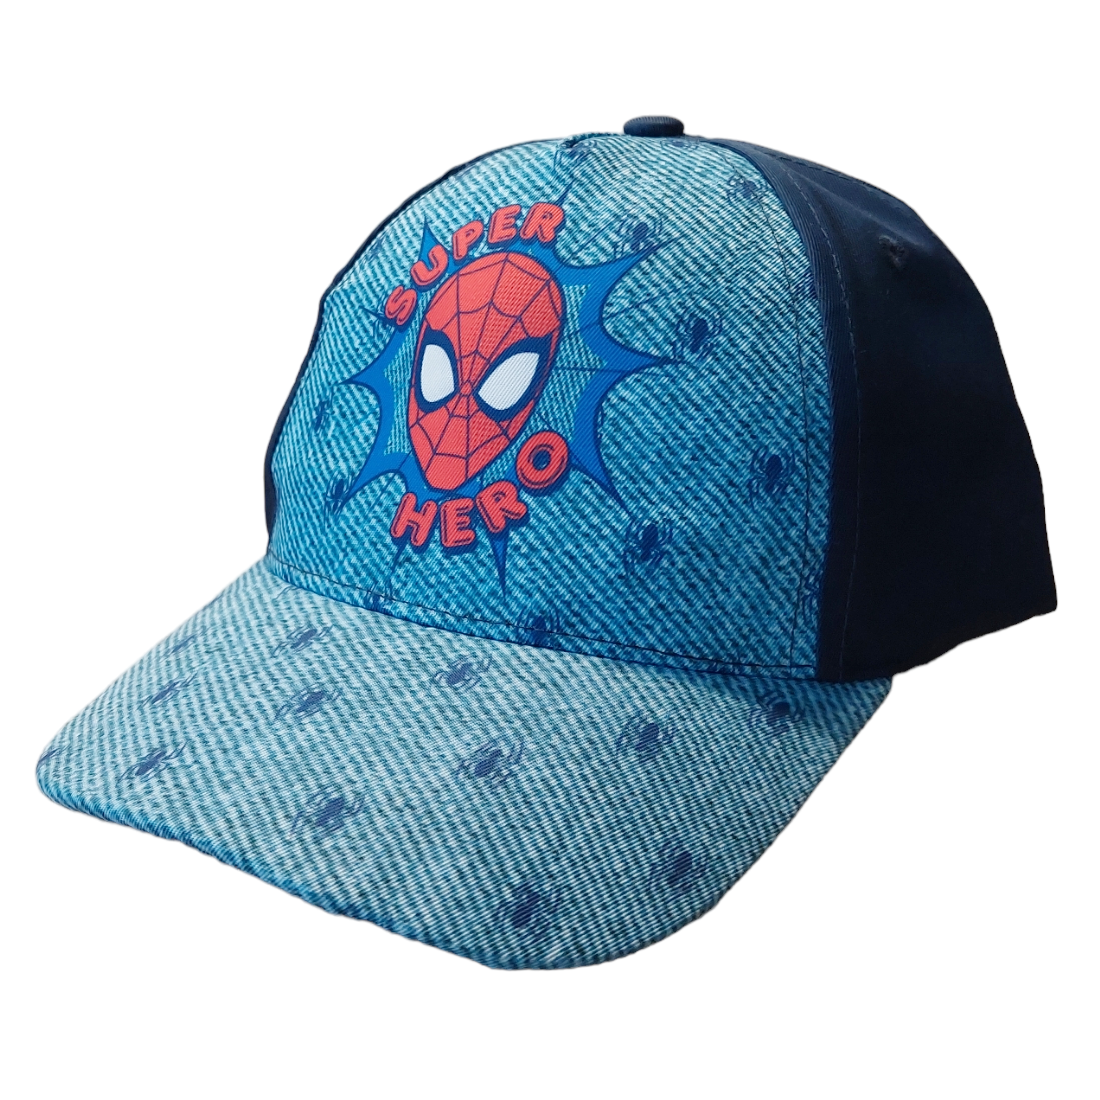 Marvel Spiderman Spider-Man Kinder Caps Capi Basecap Kappe Mütze